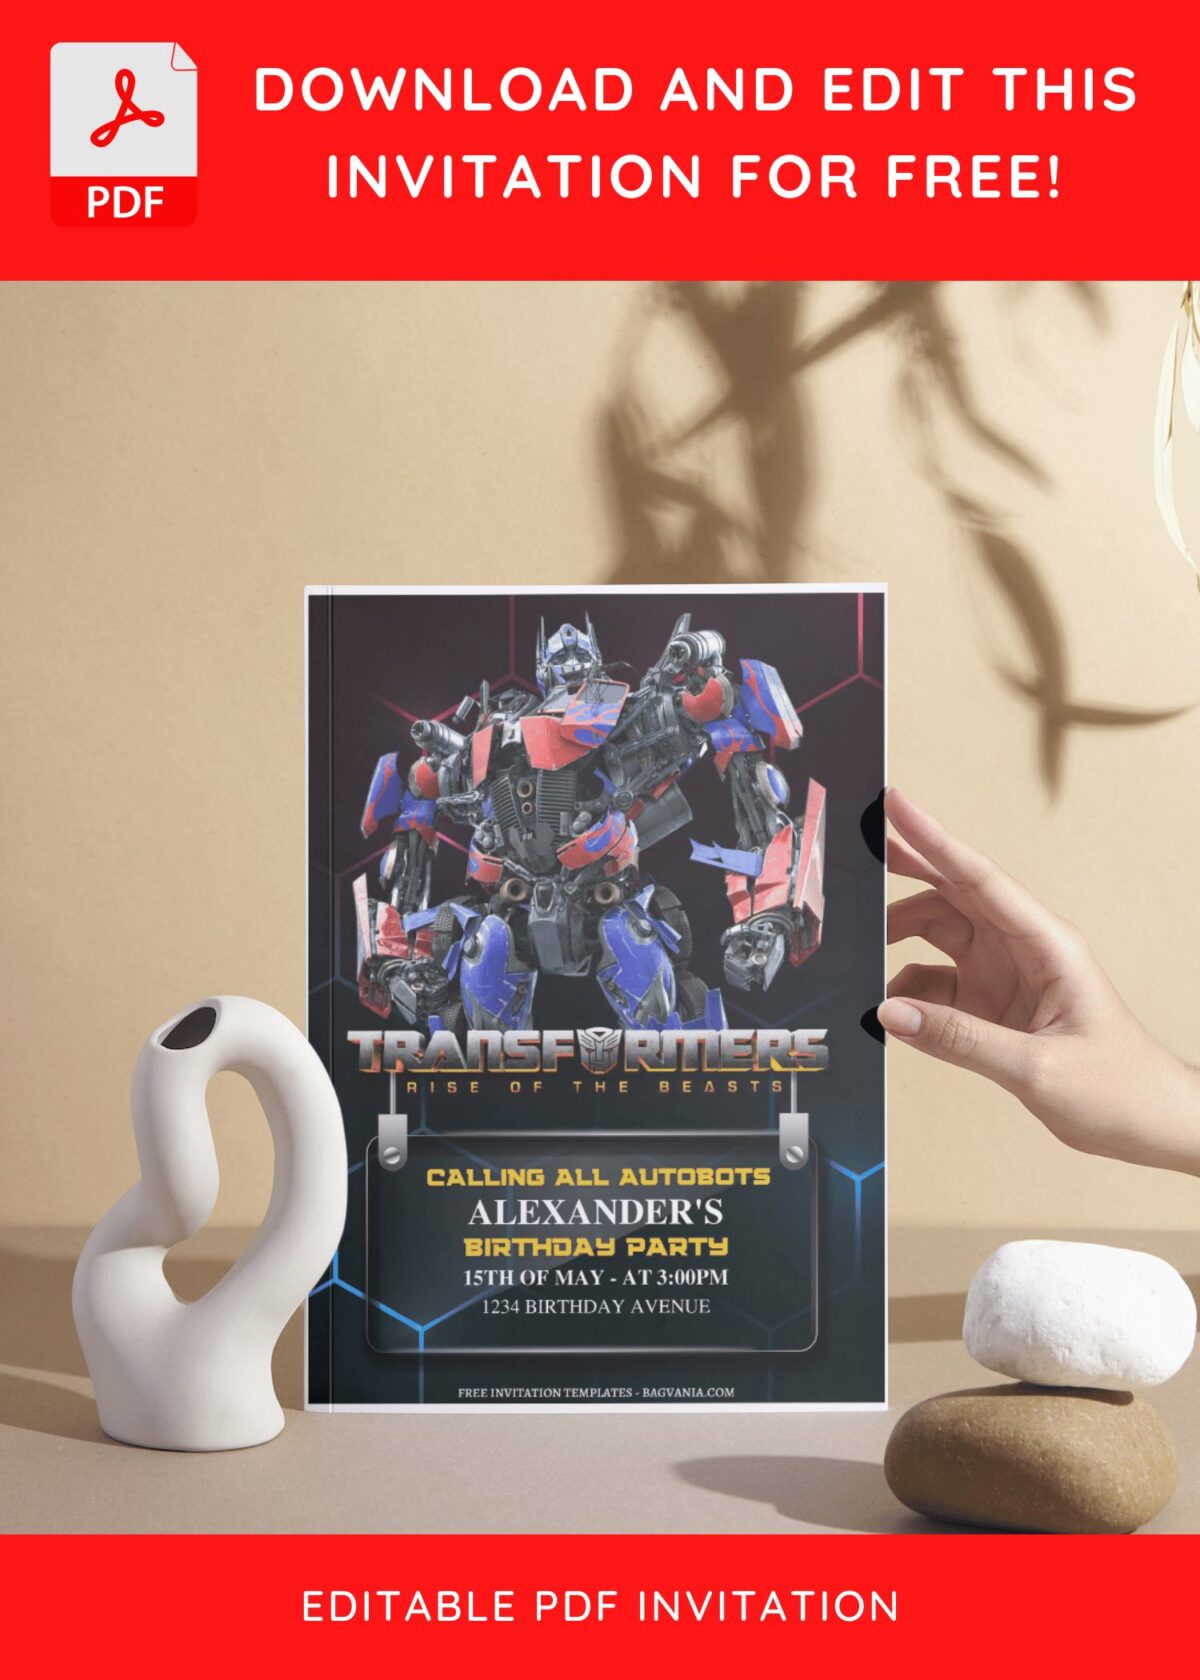 (Free Editable PDF) Roll Out The Fun Transformers Birthday Invitation Templates I